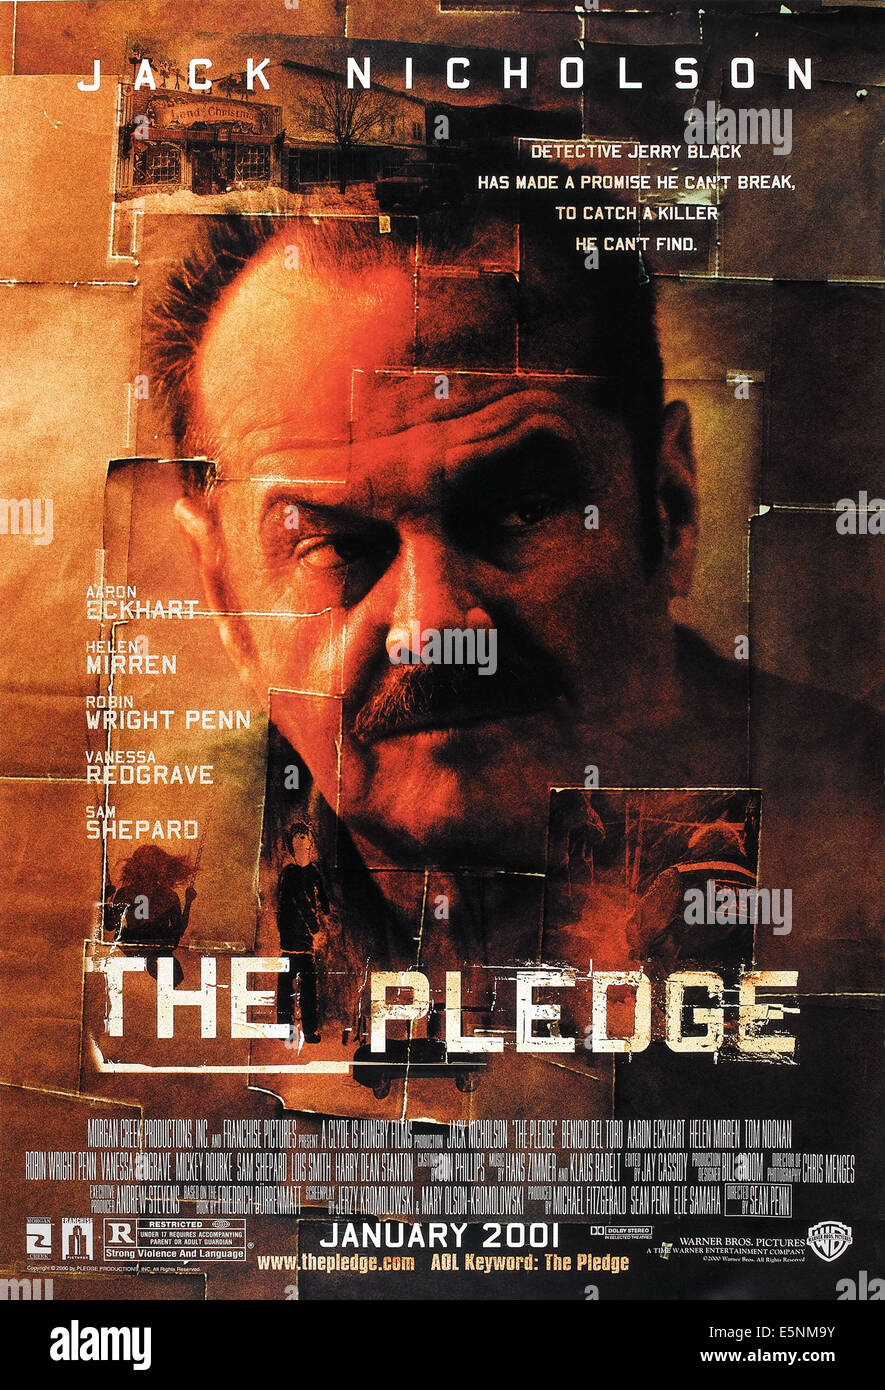 THE PLEDGE, US advance poster art, Jack Nicholson, 2001. ©Warner Bros./Courtesy Everett Collection Stock Photo